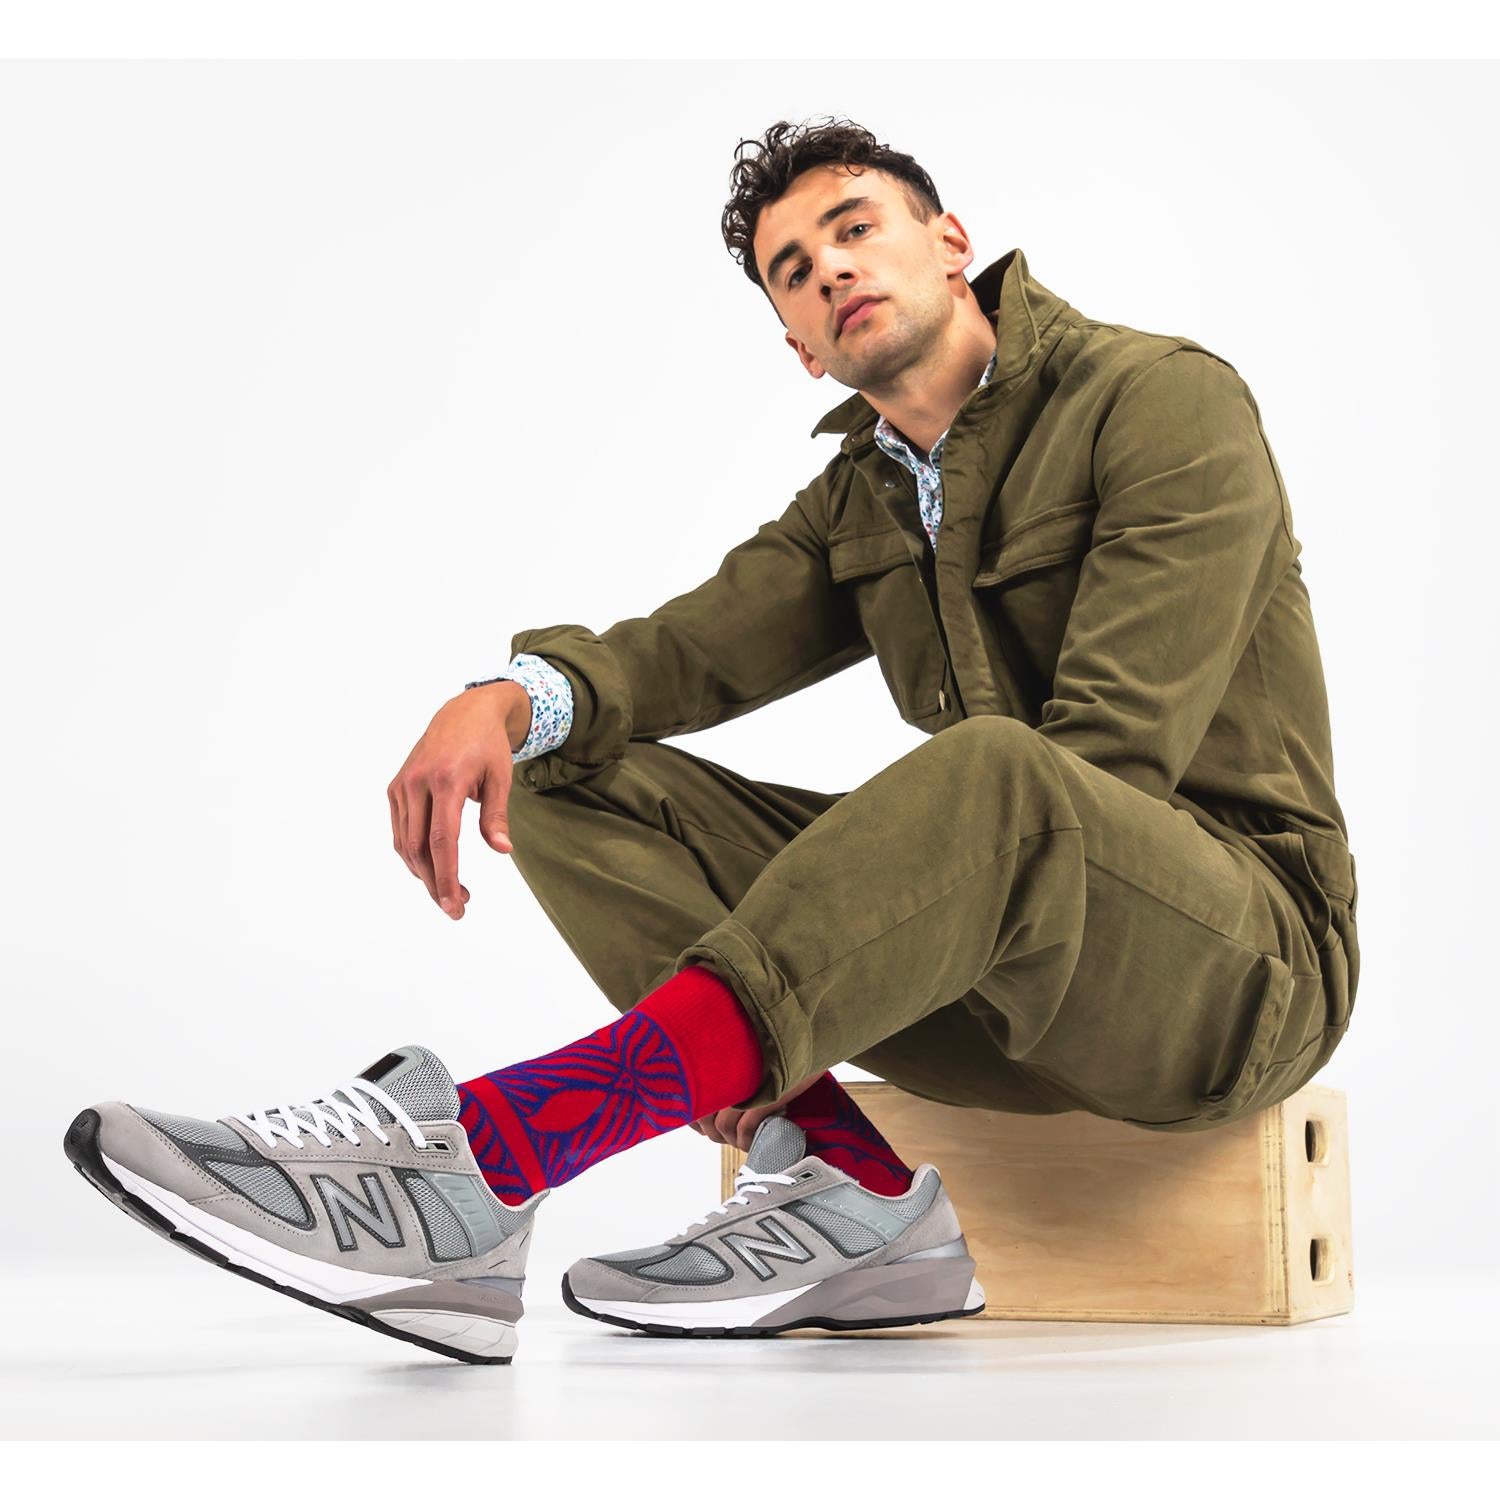 New Balance M990v5 Grey | Men's Everyday Athletic Shoes – Footwear